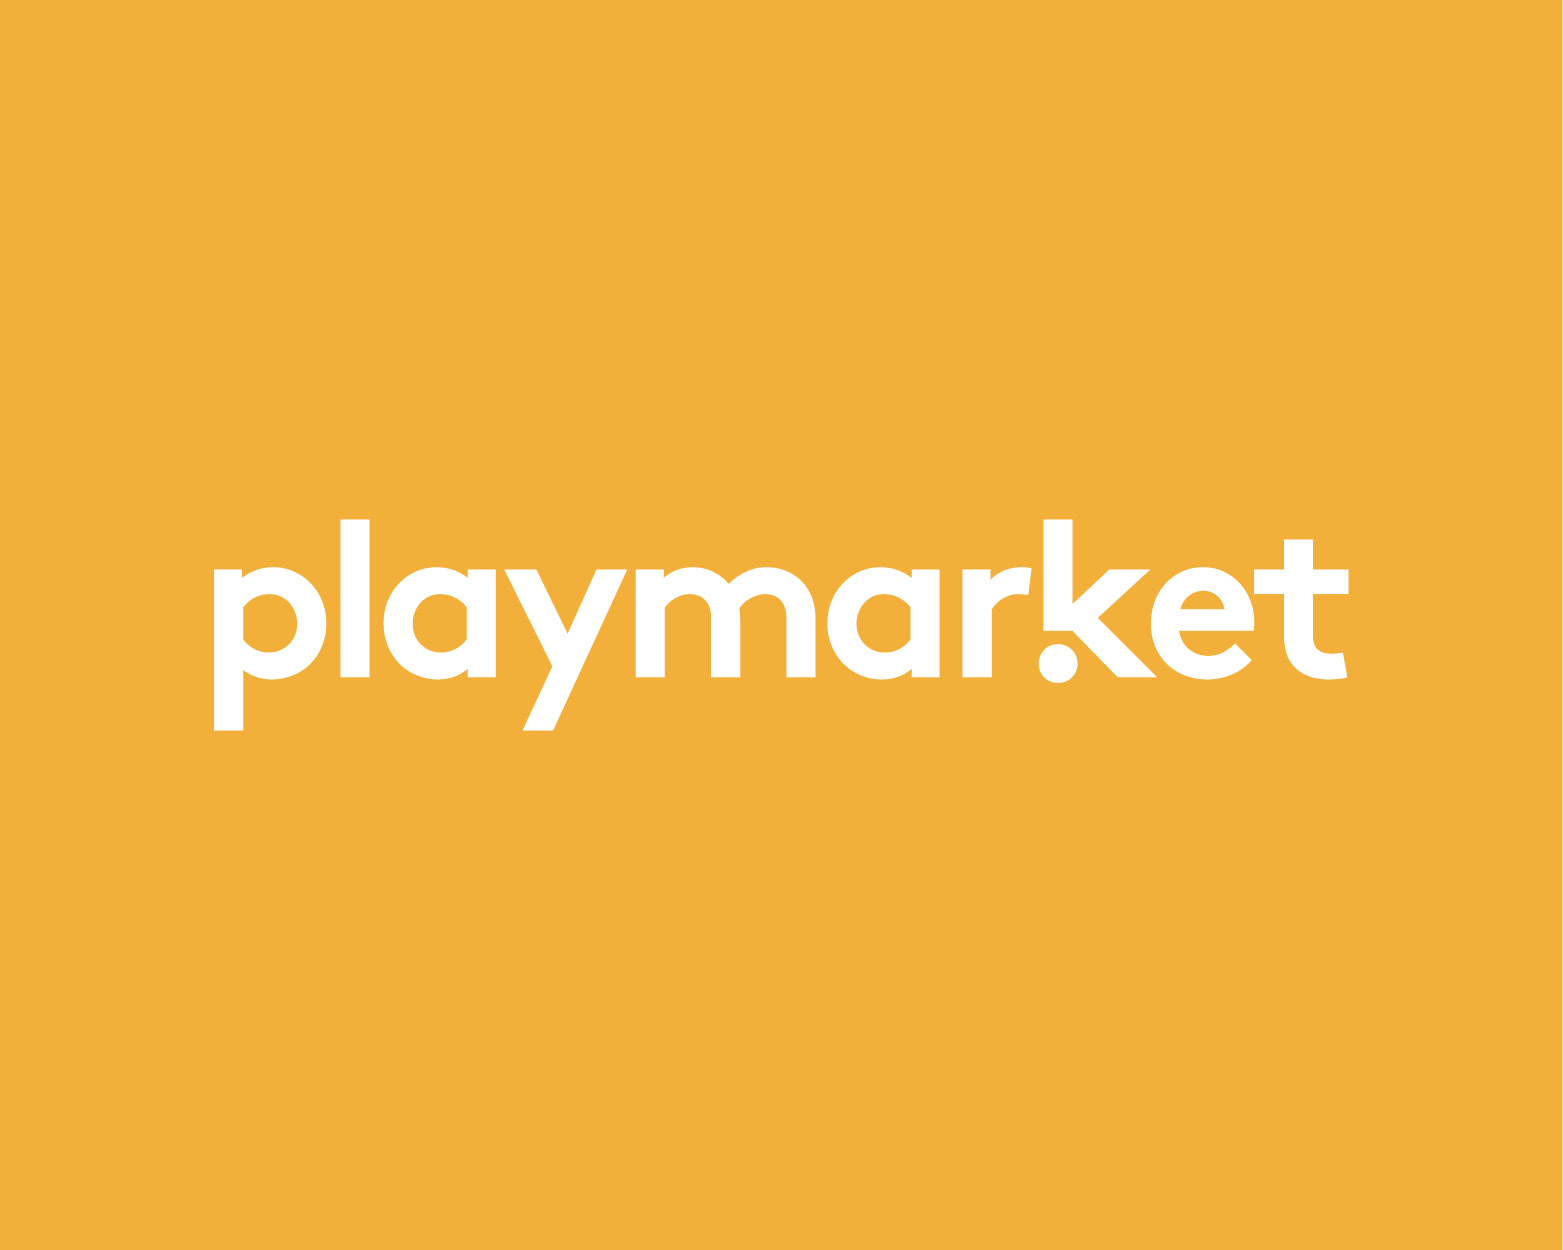 Playmarket color